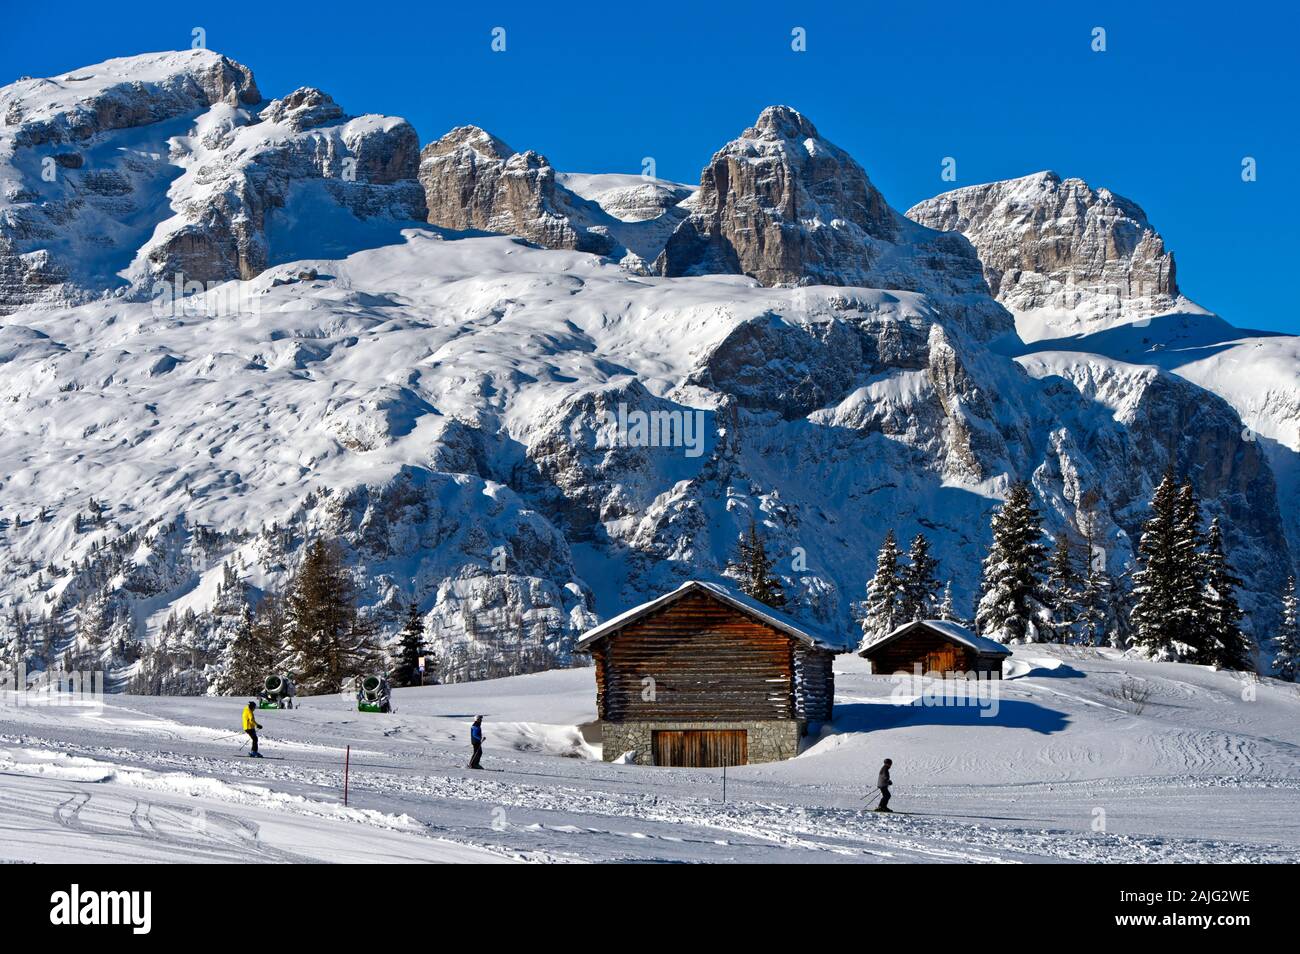 Skiing on Sella Ronda beneath the Sella mountain range, Corvara, Alta Badia, Dolomites, South Tyrol, Italy Stock Photo